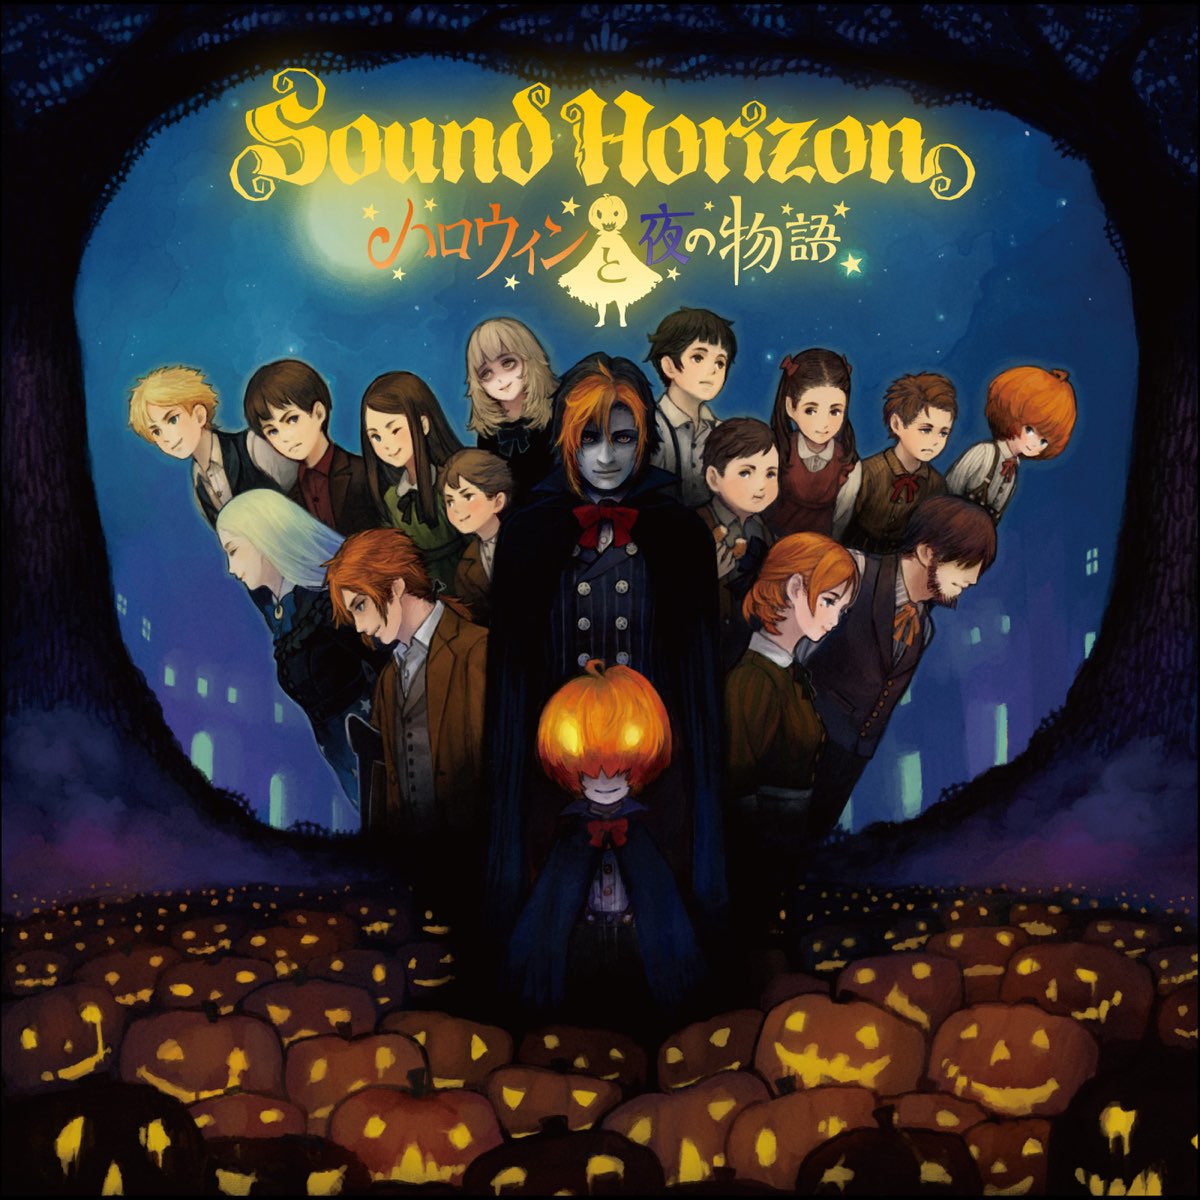 Sound Horizonの曲「星の綺麗な夜」の歌詞を考察【ハロウィンと夜の物語】